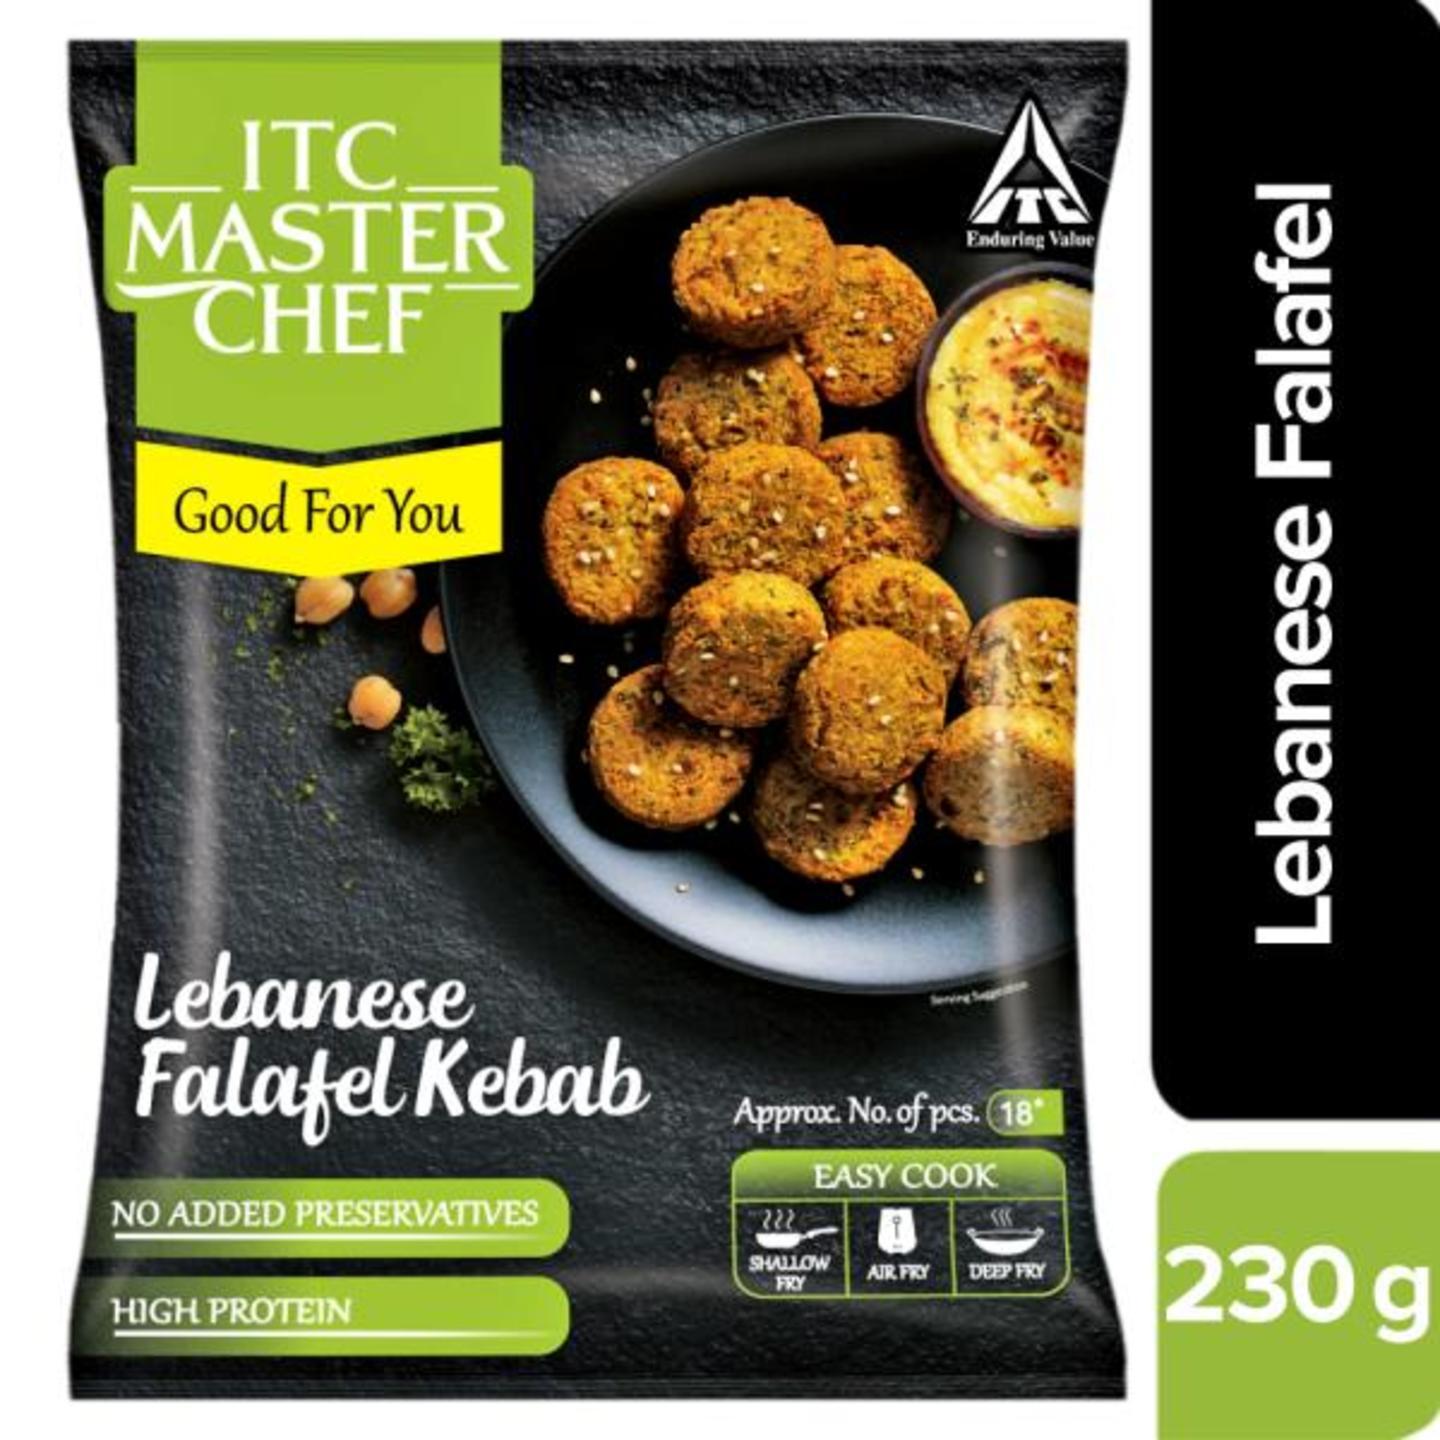 ITC Master Chef Lebanese Falafel Kebab 230 g